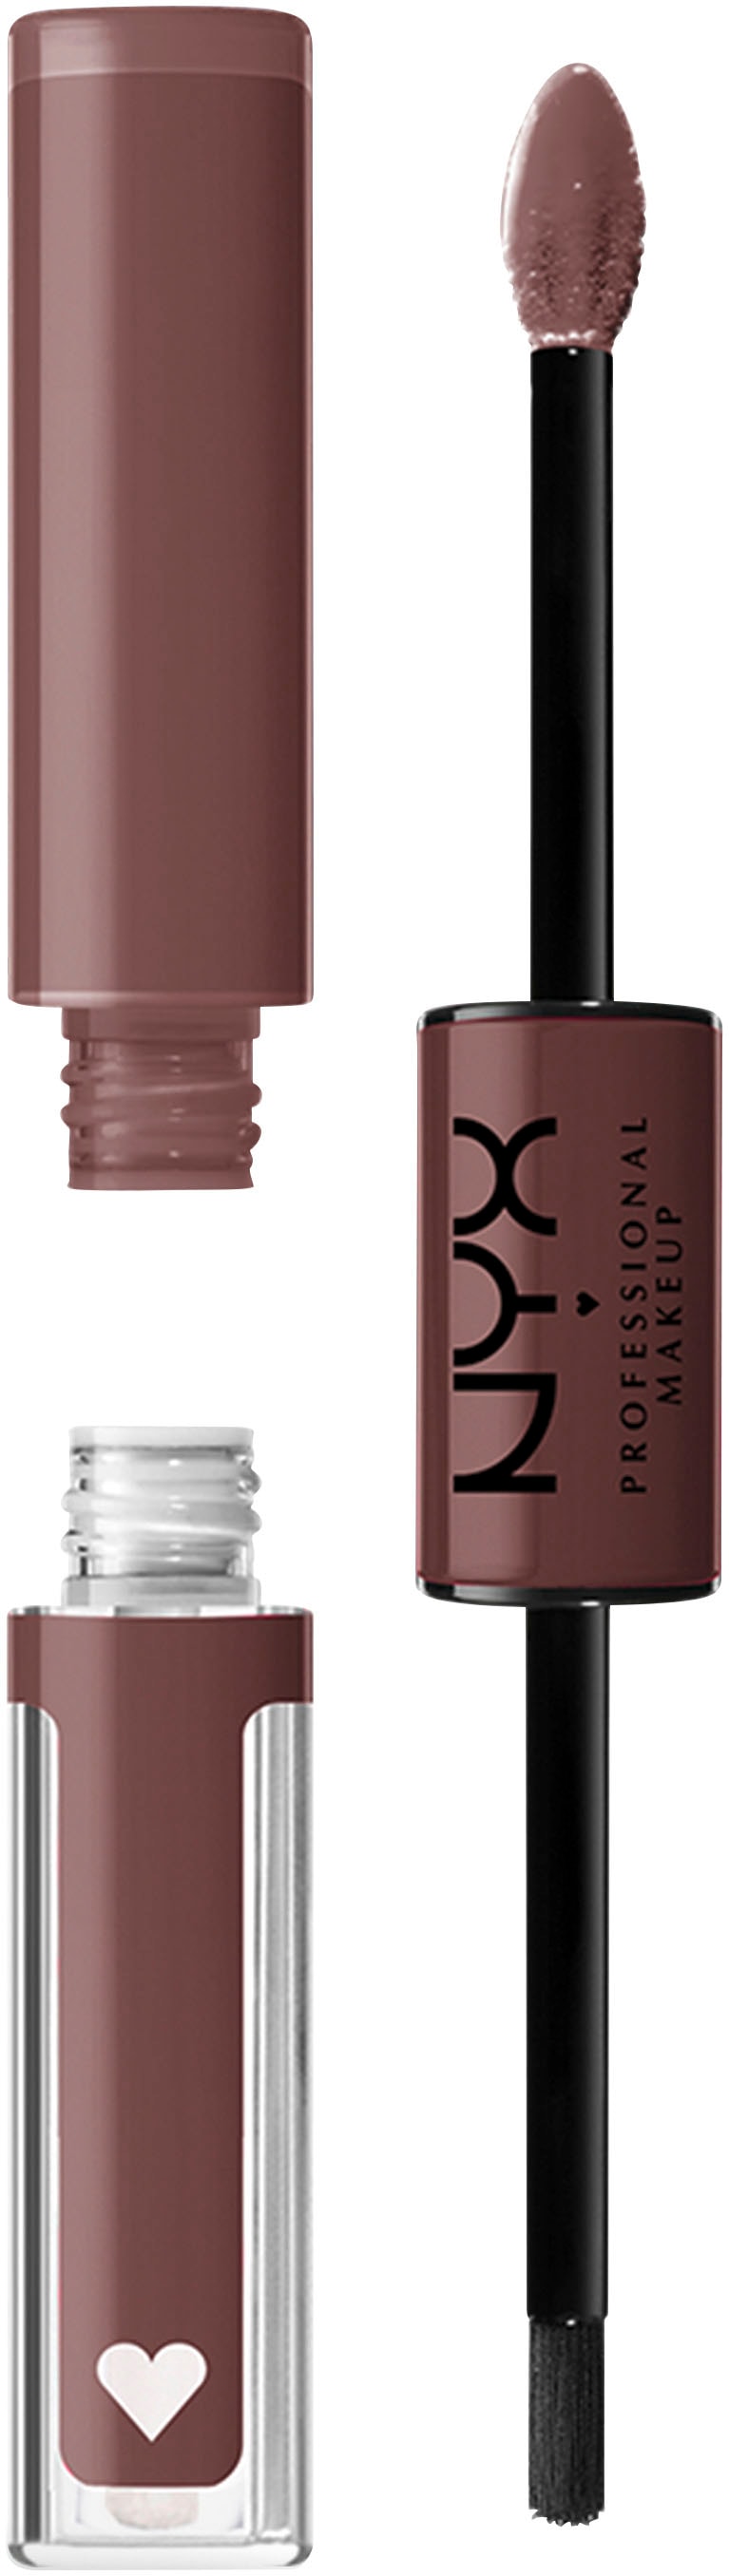 NYX Lippenstift »NYX Professional Makeup Shine Loud High Pigment Lip Shine«